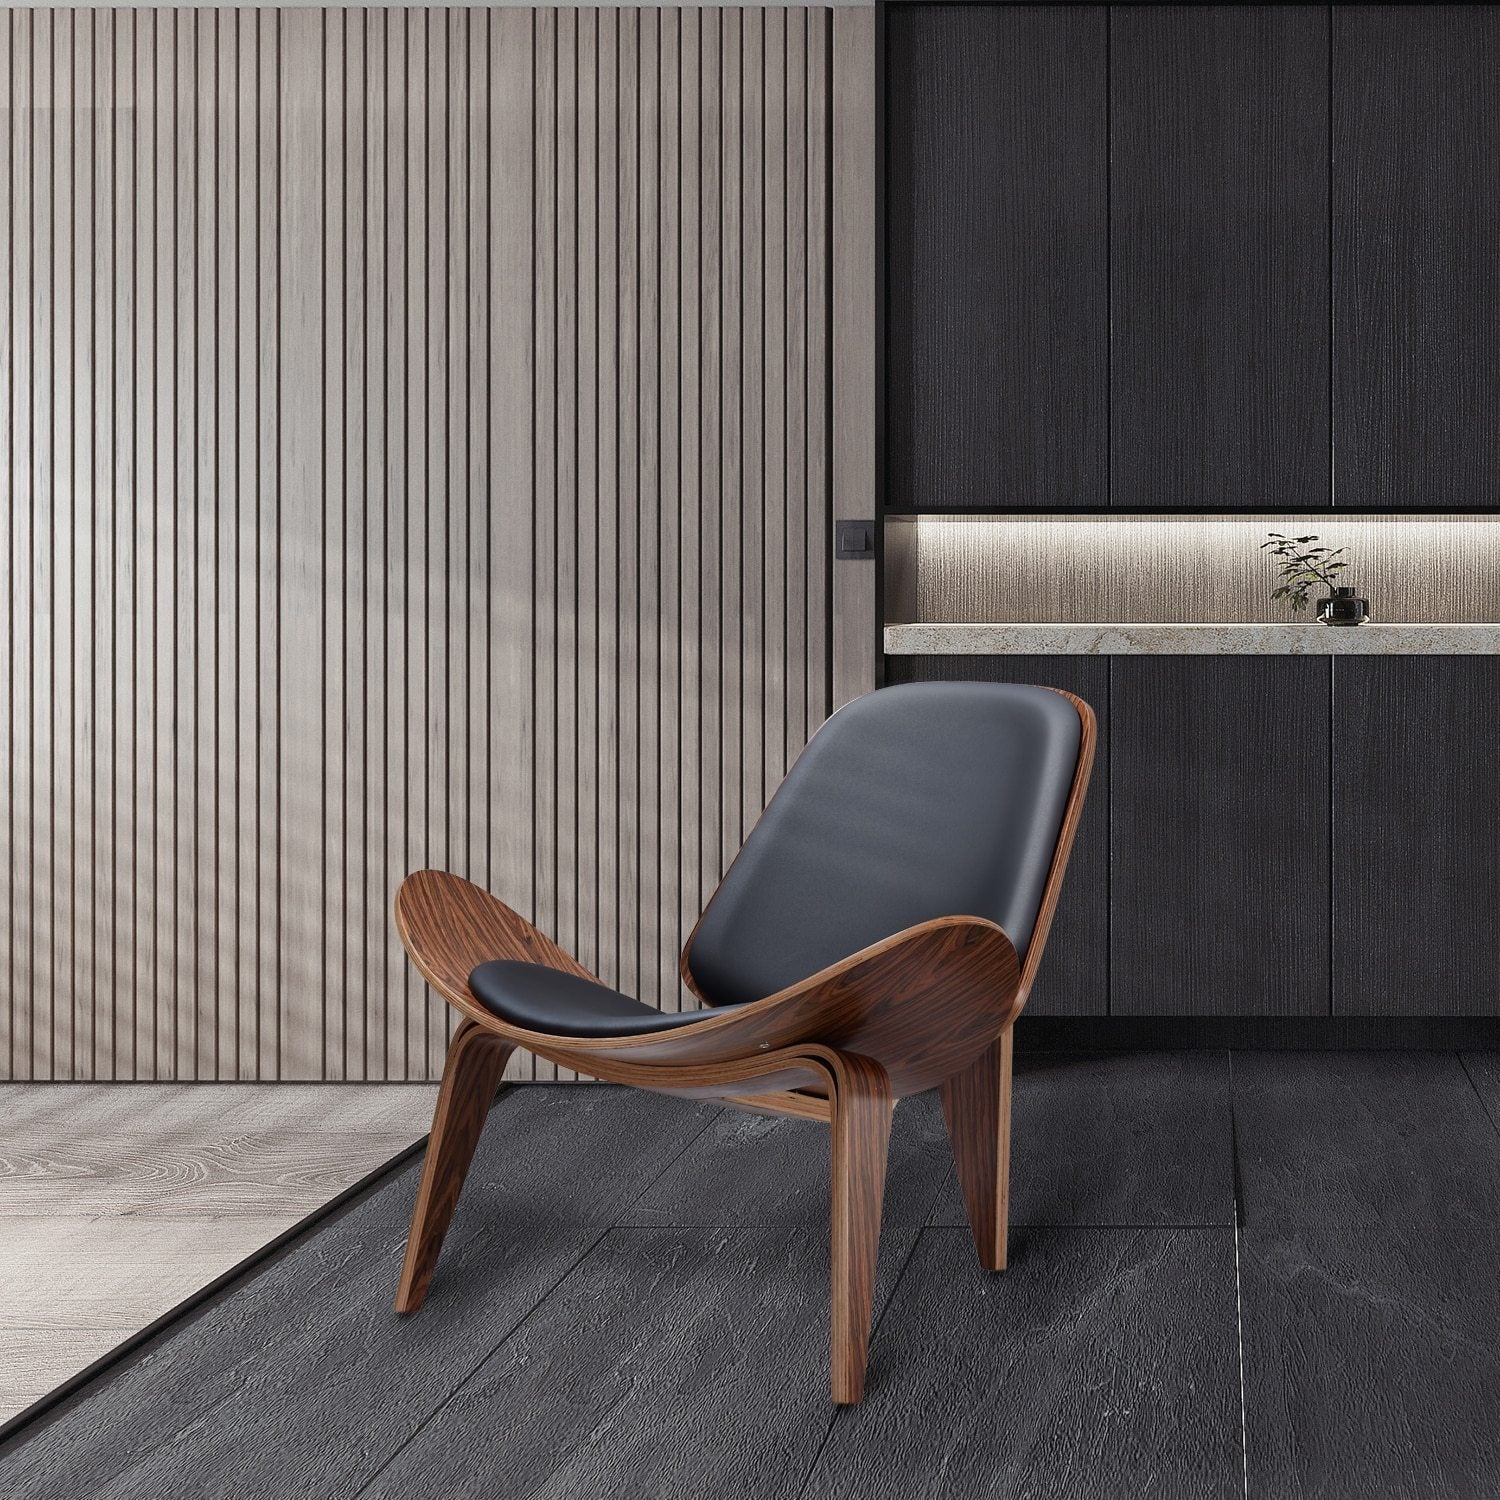 Luxury Vegan Leather Lounge Modern & Homes for Elegant Chair: Design